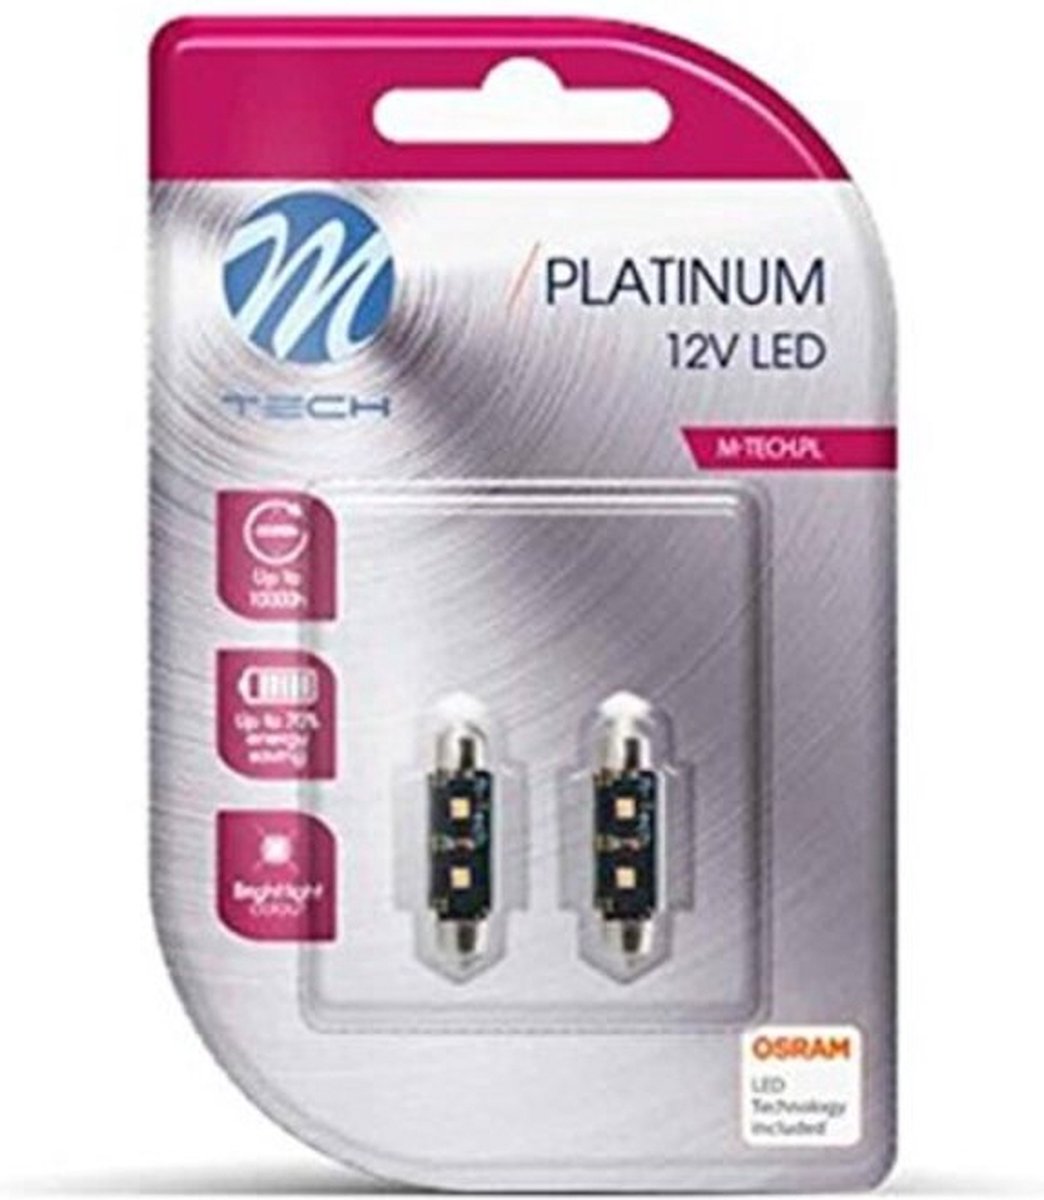 M-Tech LED C5W 12V 36mm - Platinum 2x Led diode - Canbus - Wit - Set